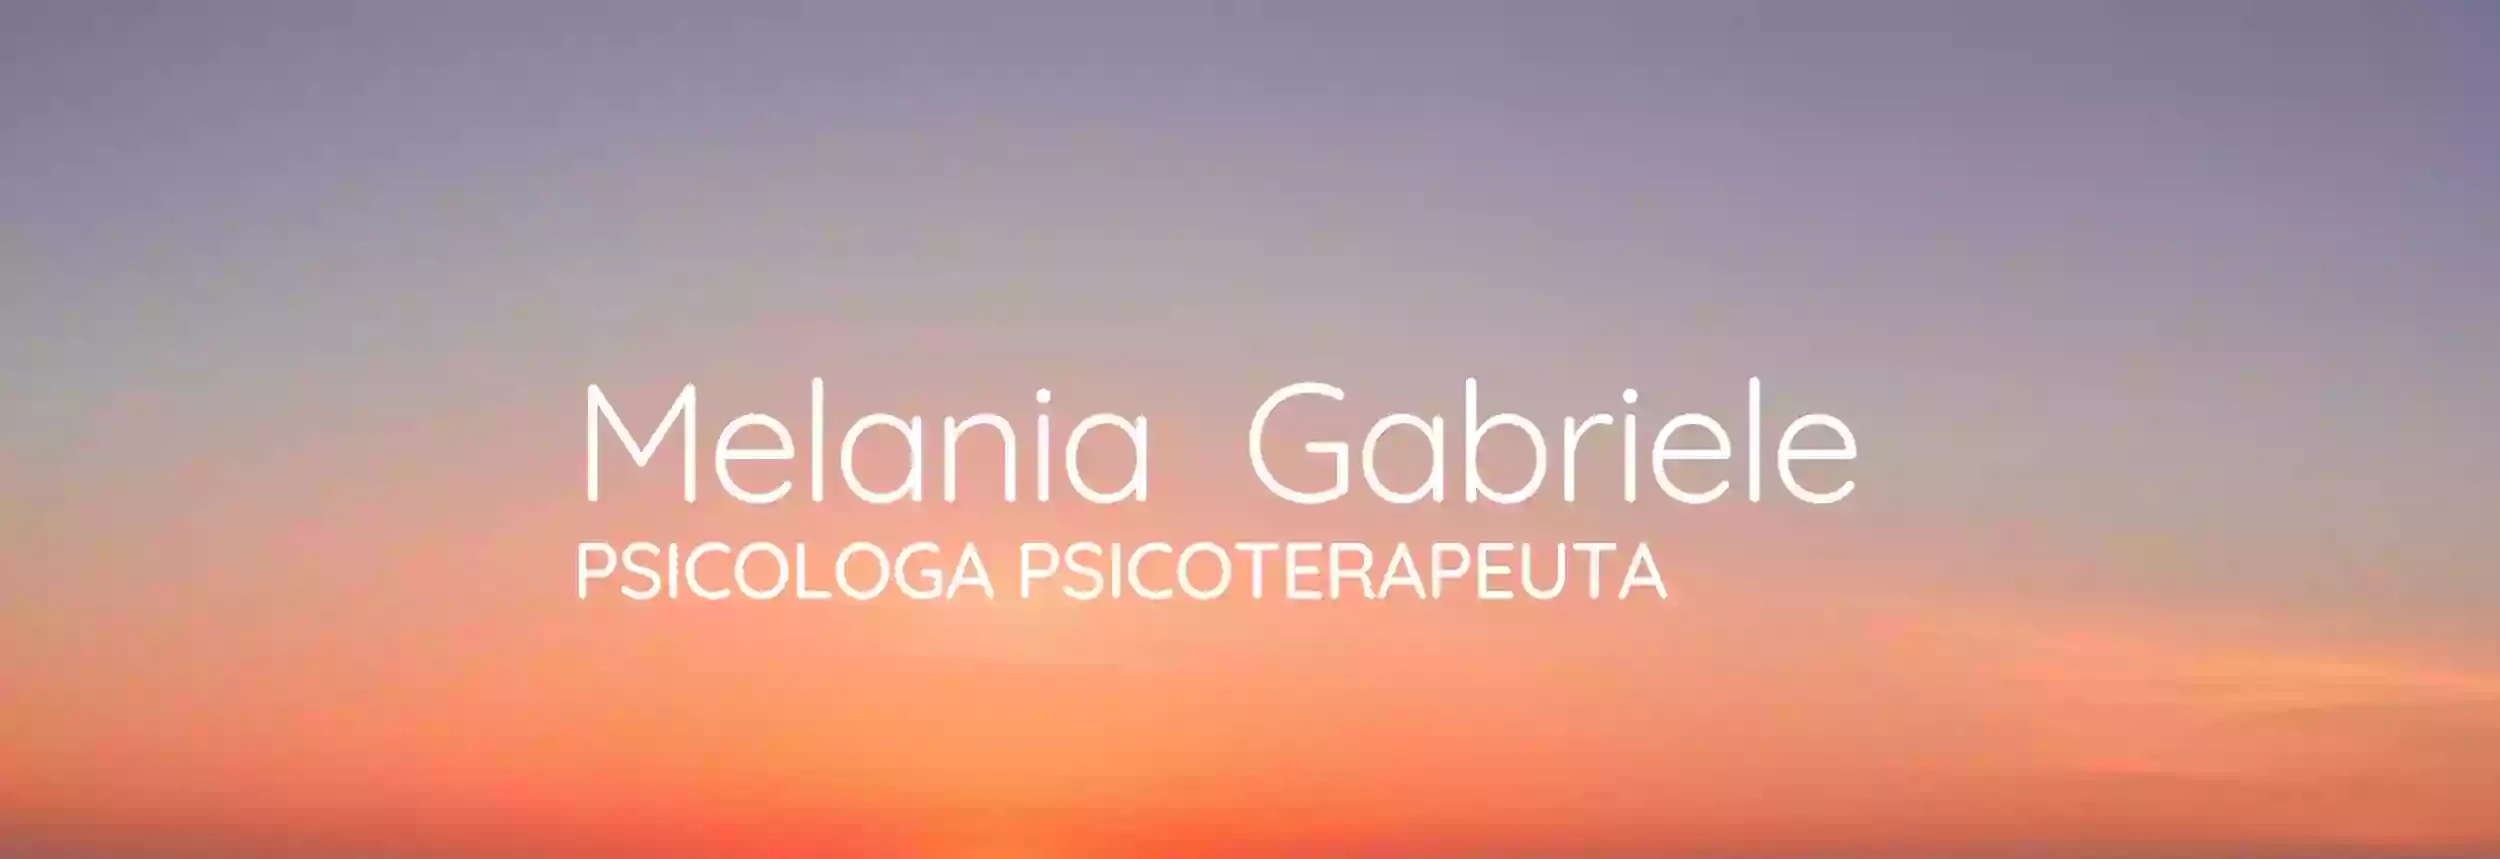 Melania Gabriele Psicologa Psicoterapeuta Roma